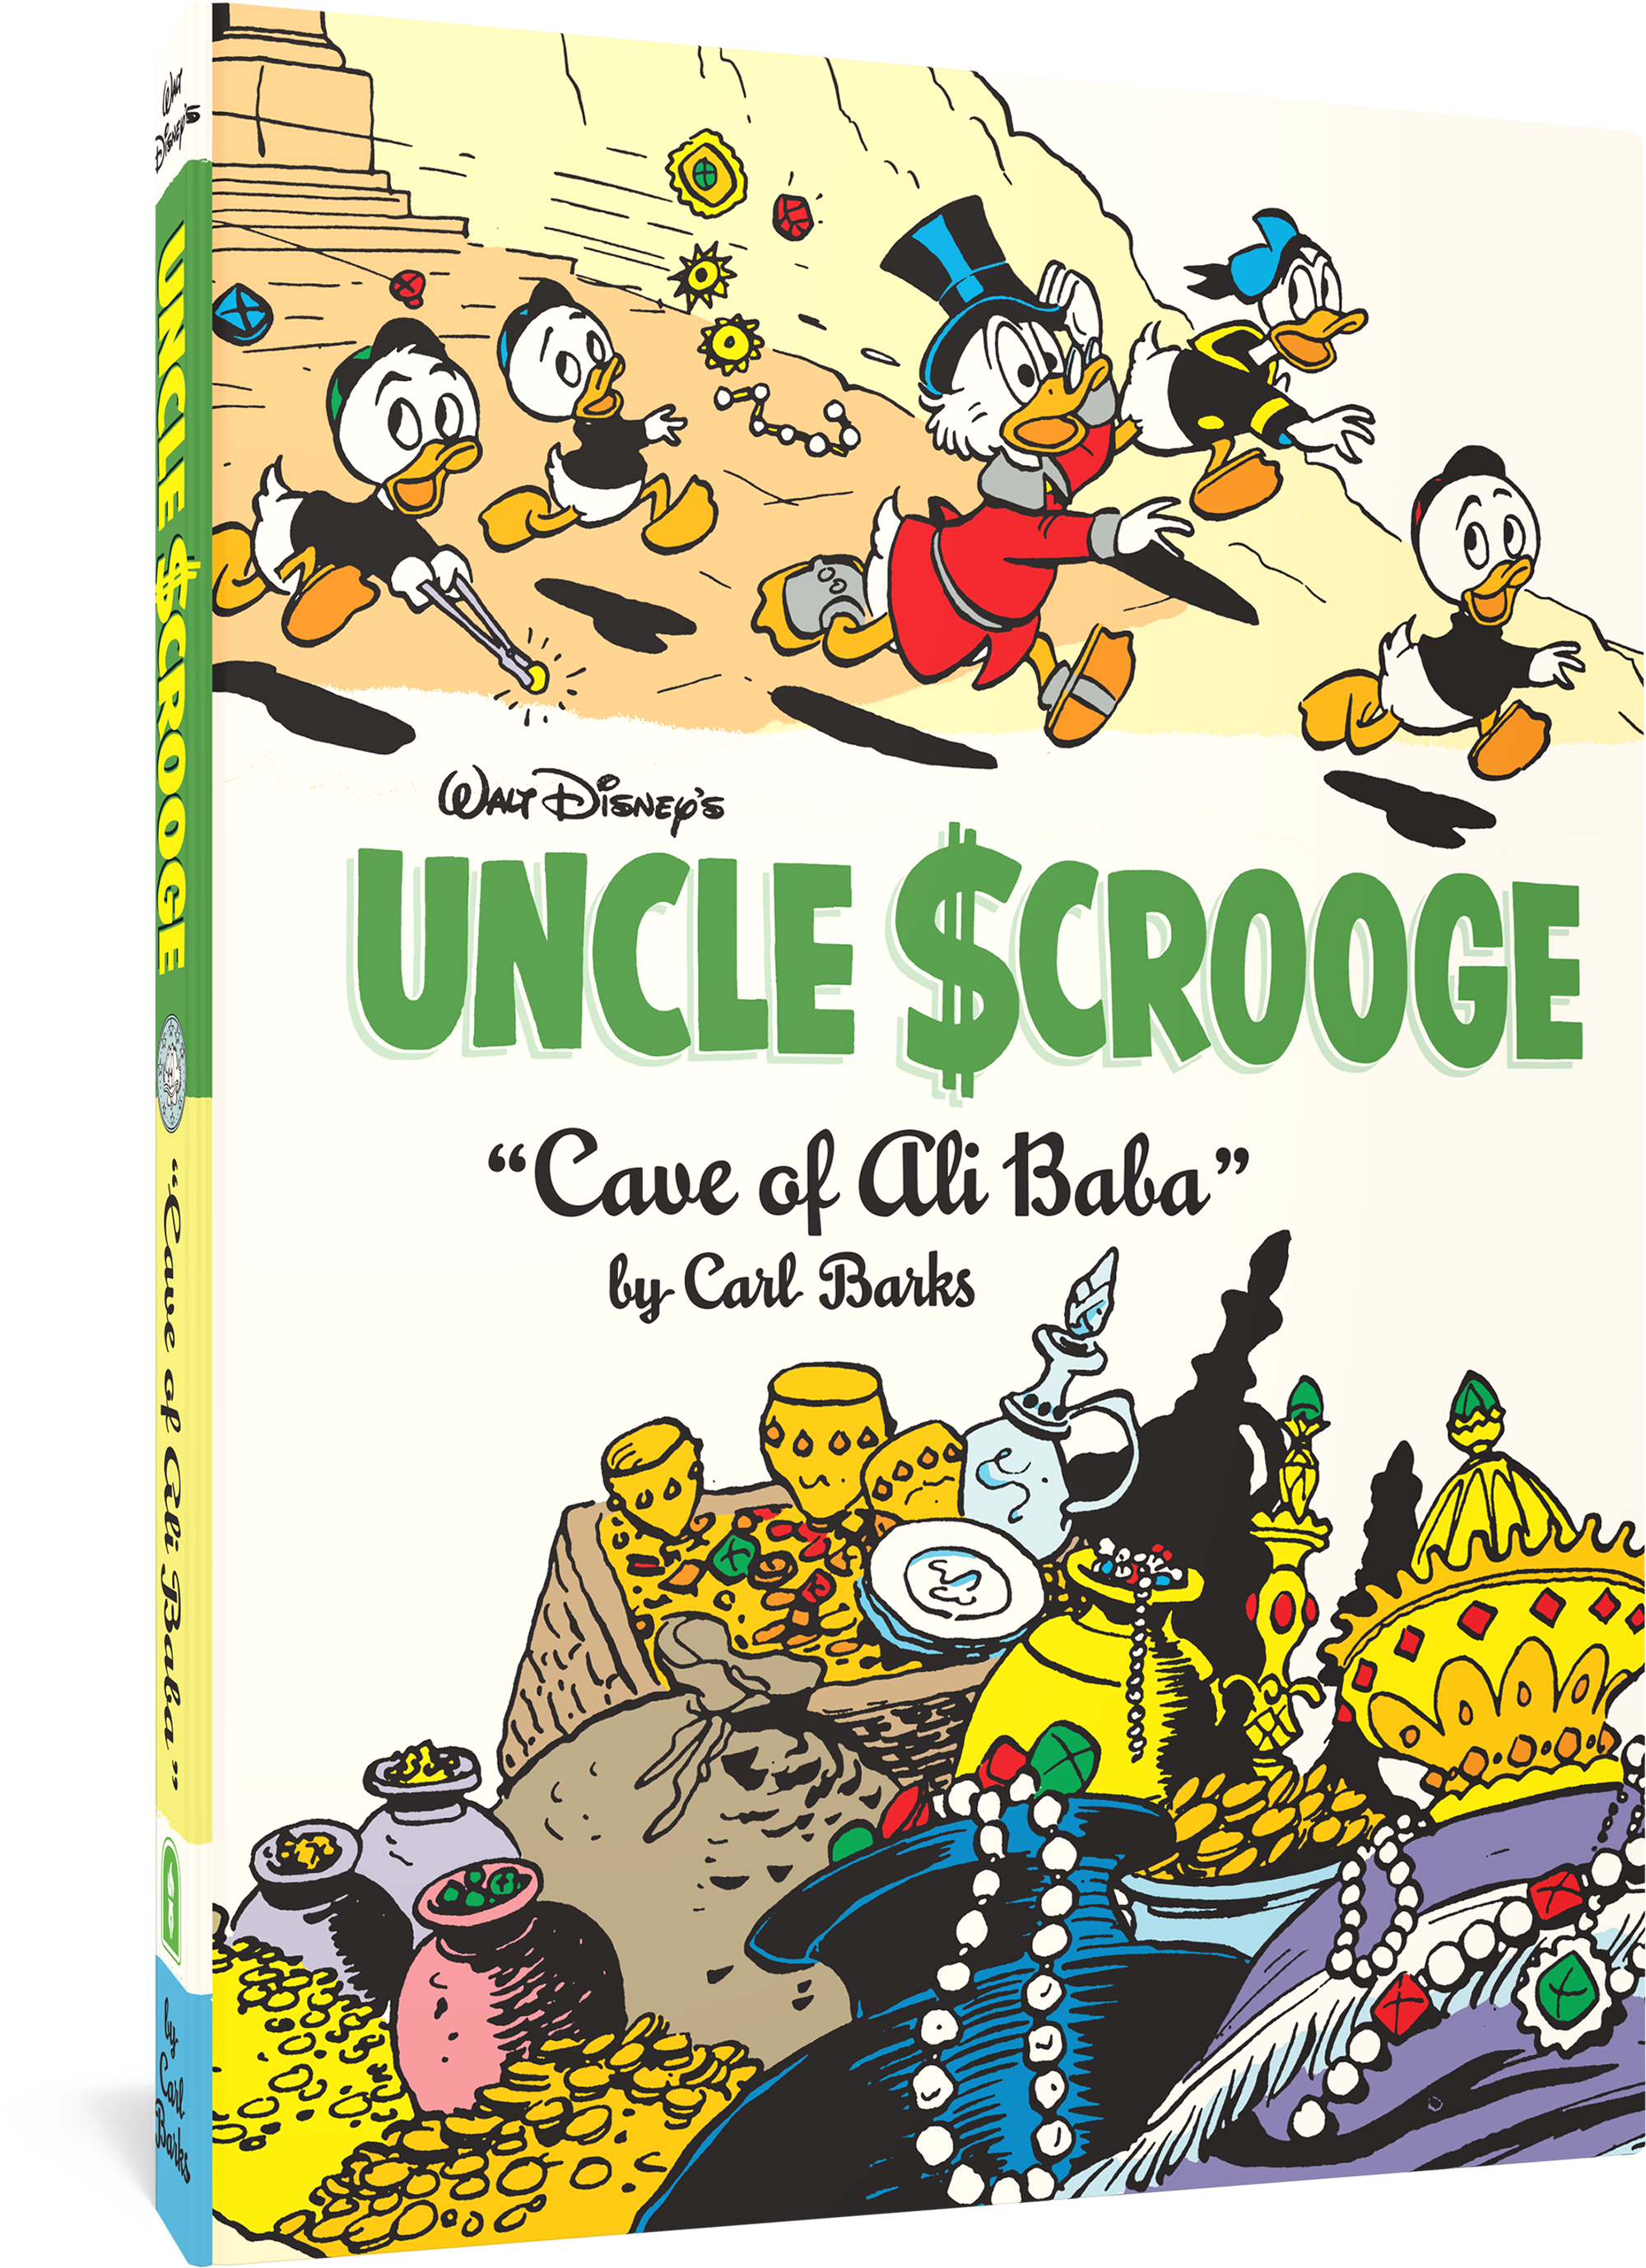 Complete Carl Barks Disney Library Hardcover Volume 28 Walt Disney's Uncle Scrooge Cave of Ali Baba